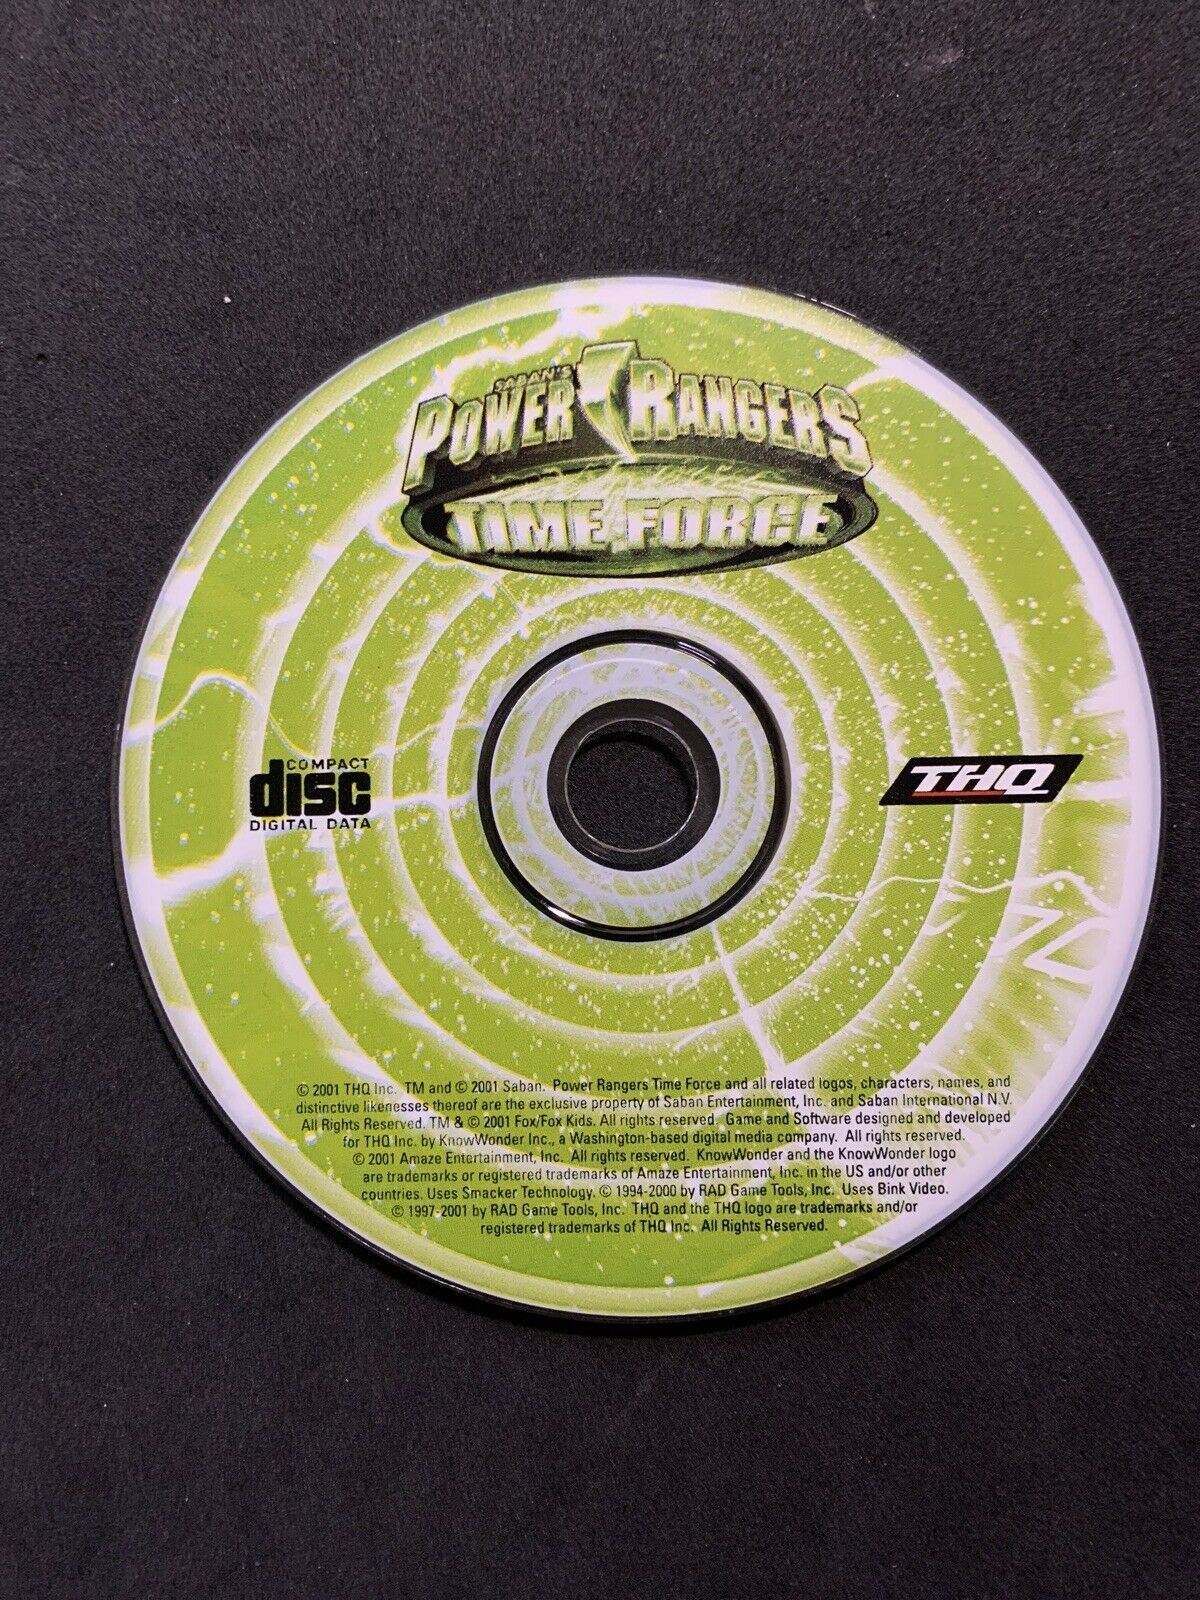 Power Rangers Time Force - PC CDROM 2001 Windows Arcade Game